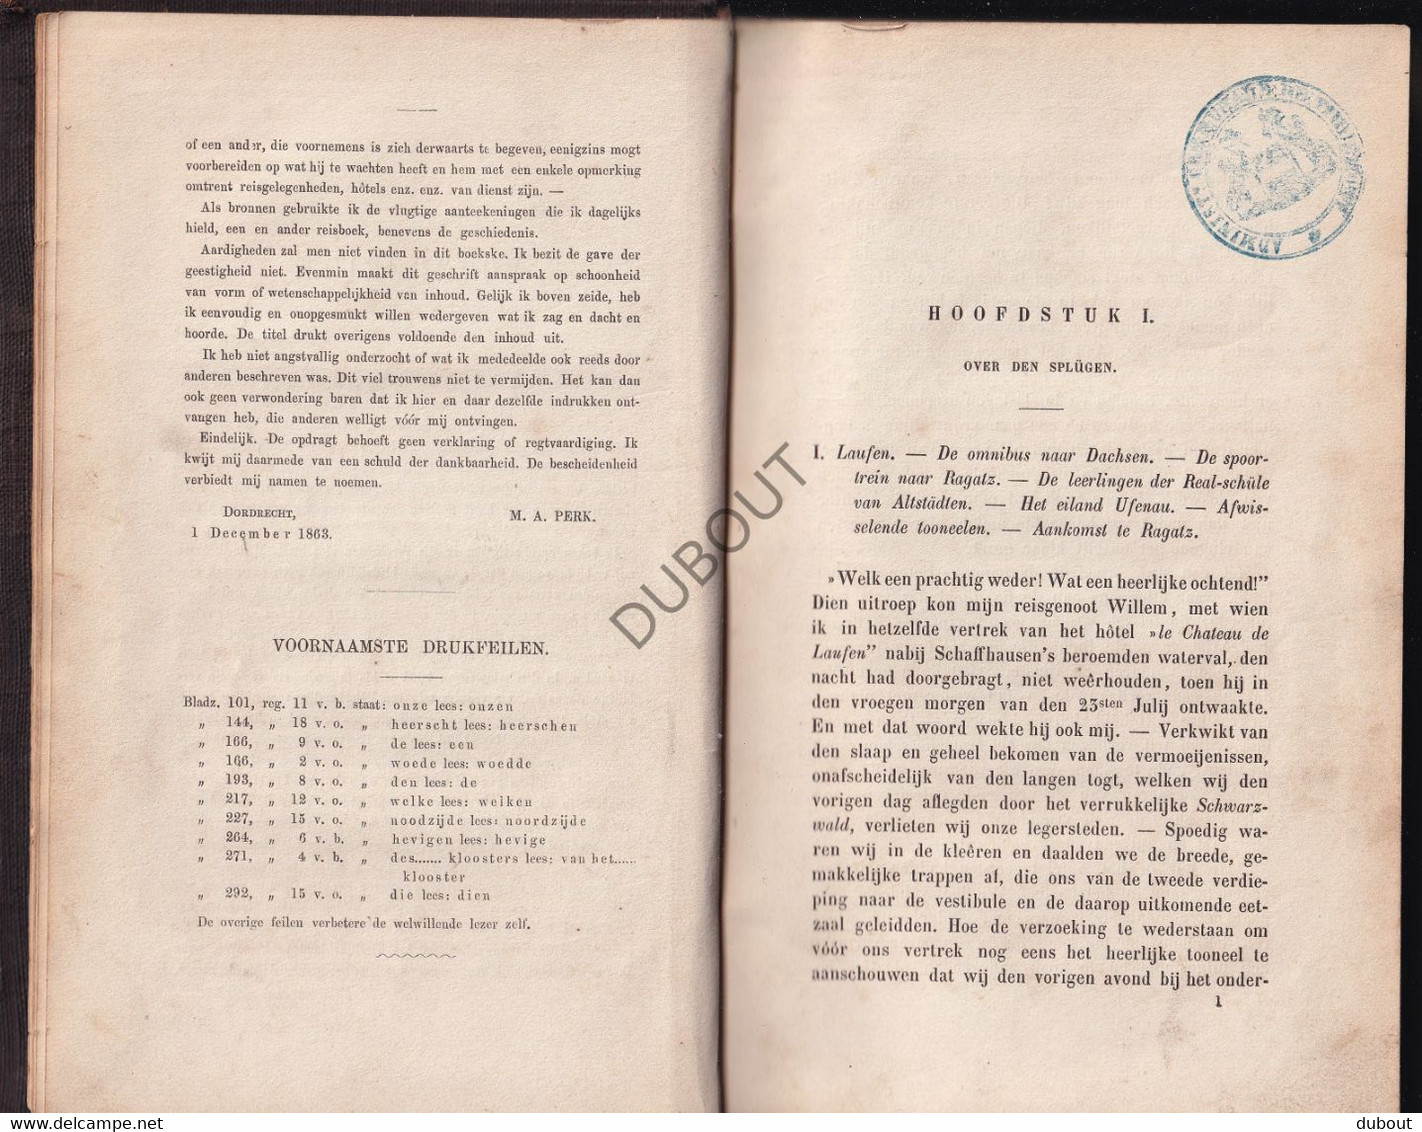 Italië/Dordrecht - Uit Opper-Italië - 1864 - Reisverhaal, Auteur: M.A. Perk, Predikant Te Dordrecht  (S297) - Anciens